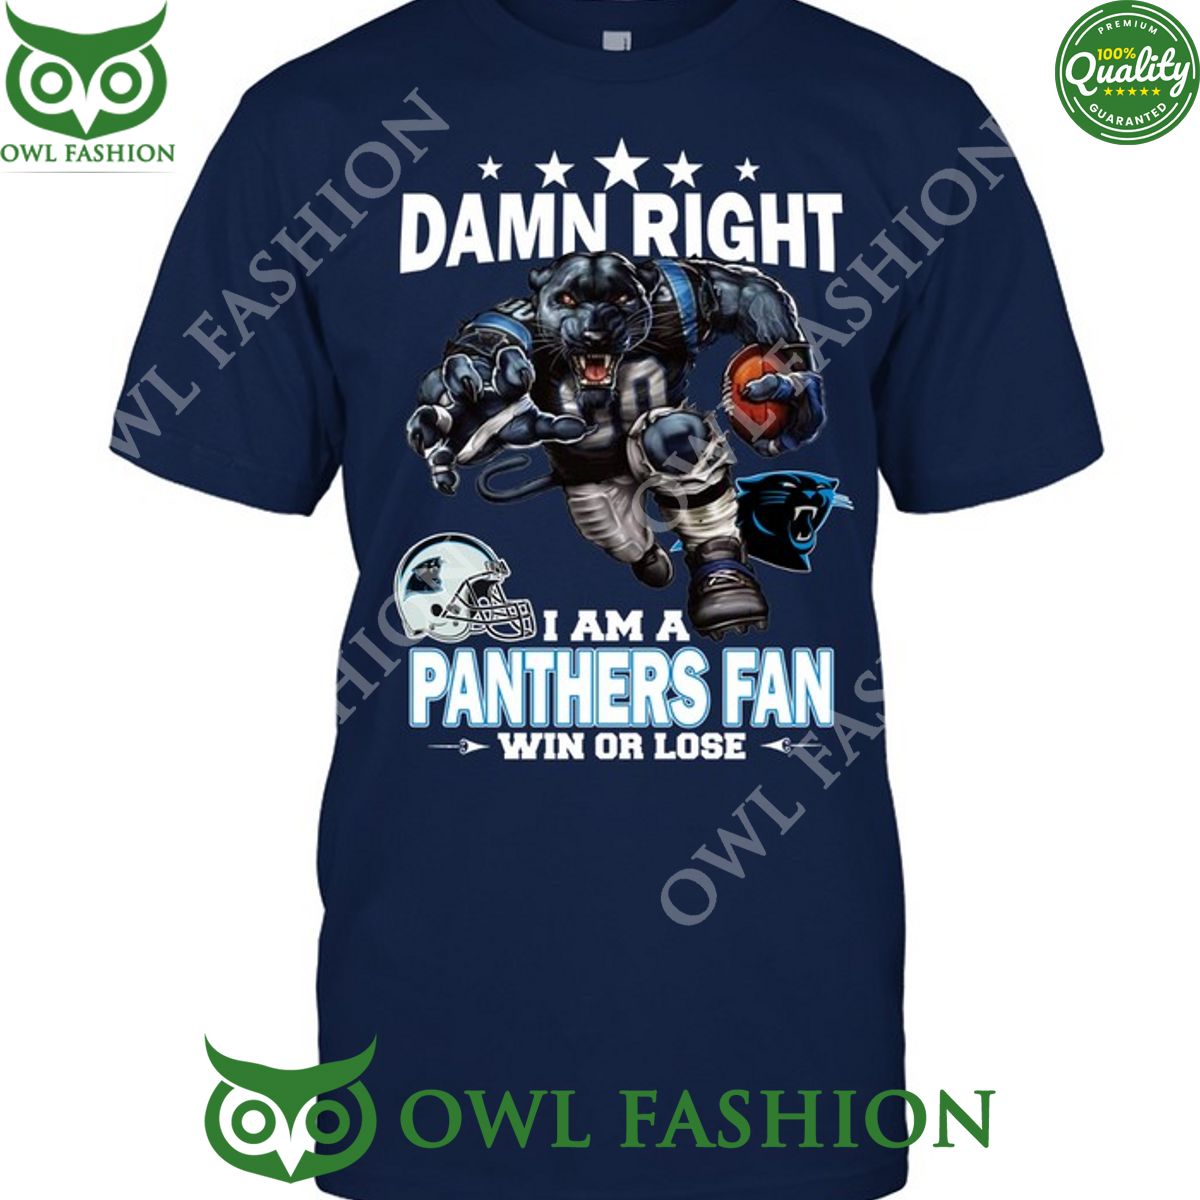 Damn Right Carolina Panthers NFL Fan Win or lose t shirt